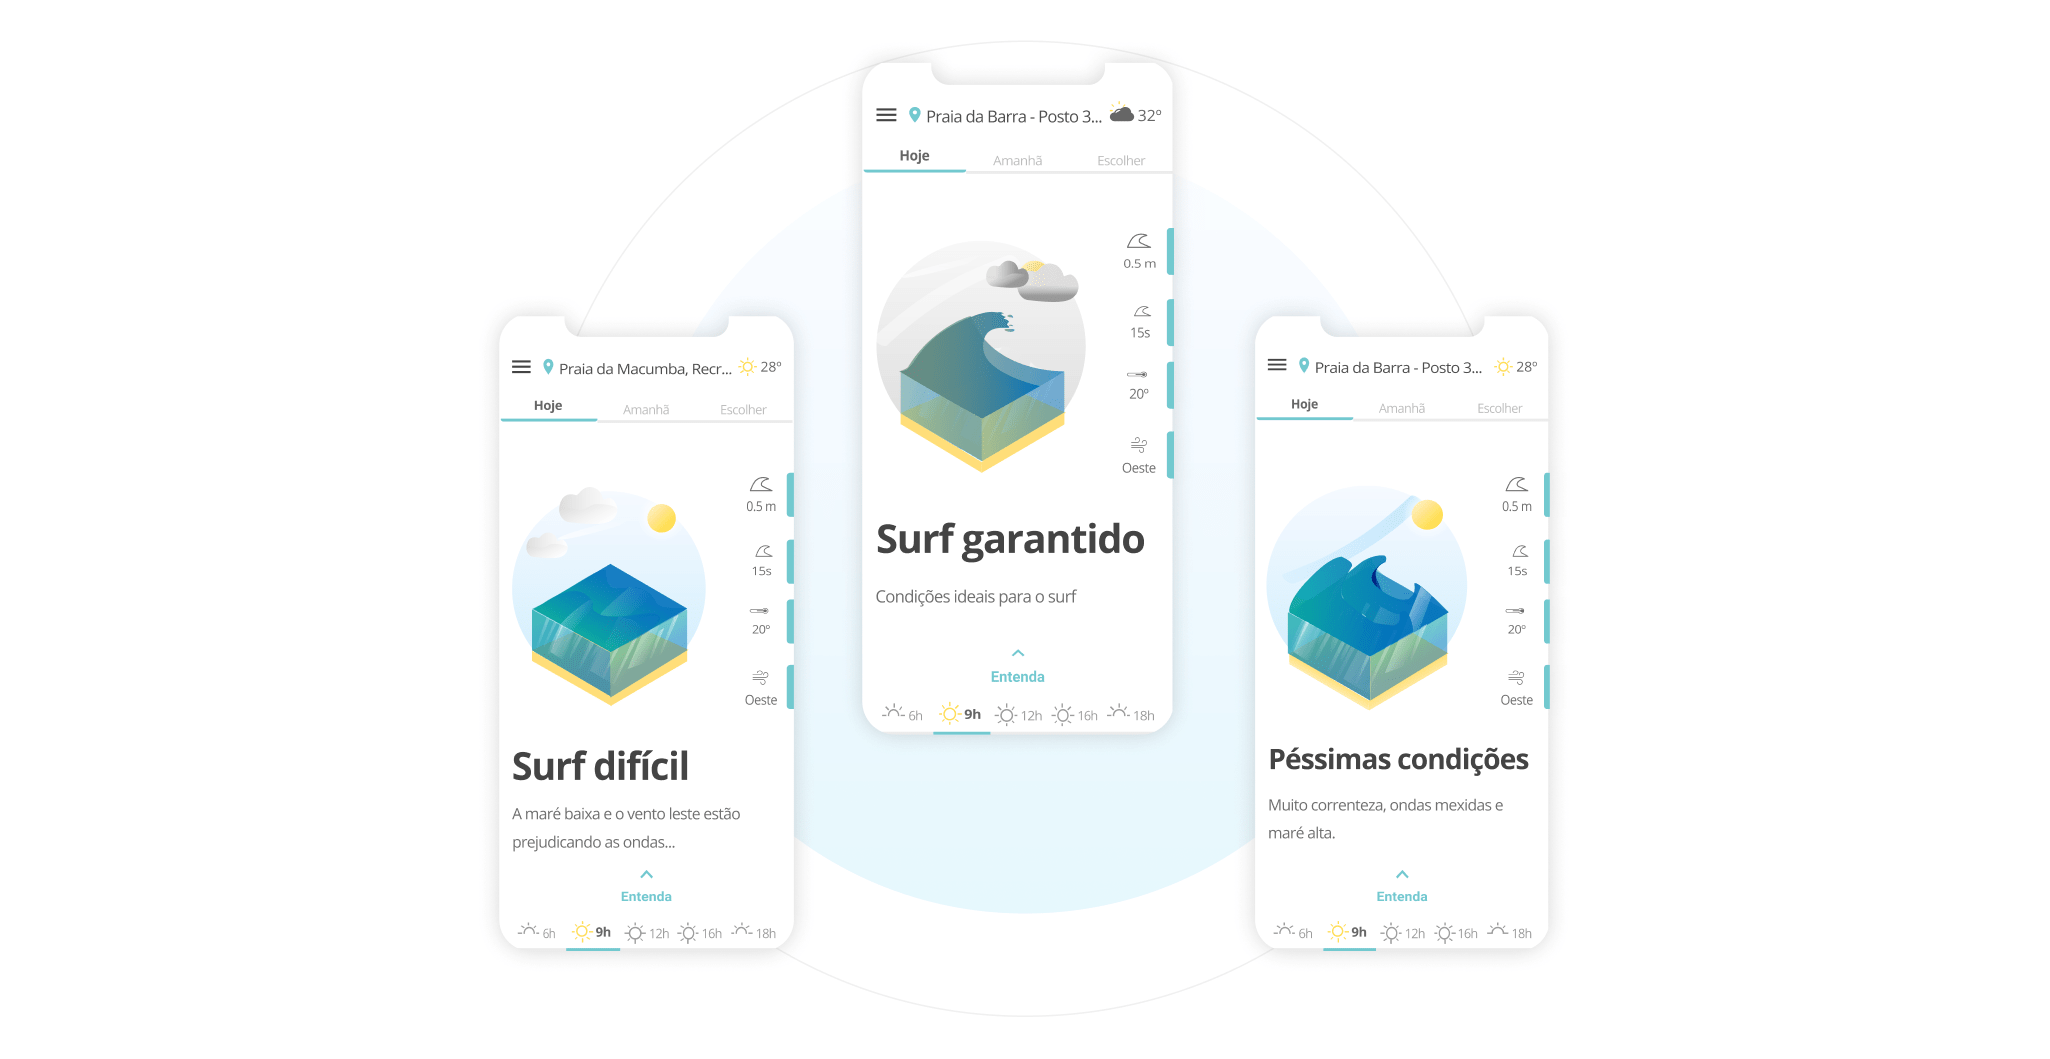 Surfsapp user flow